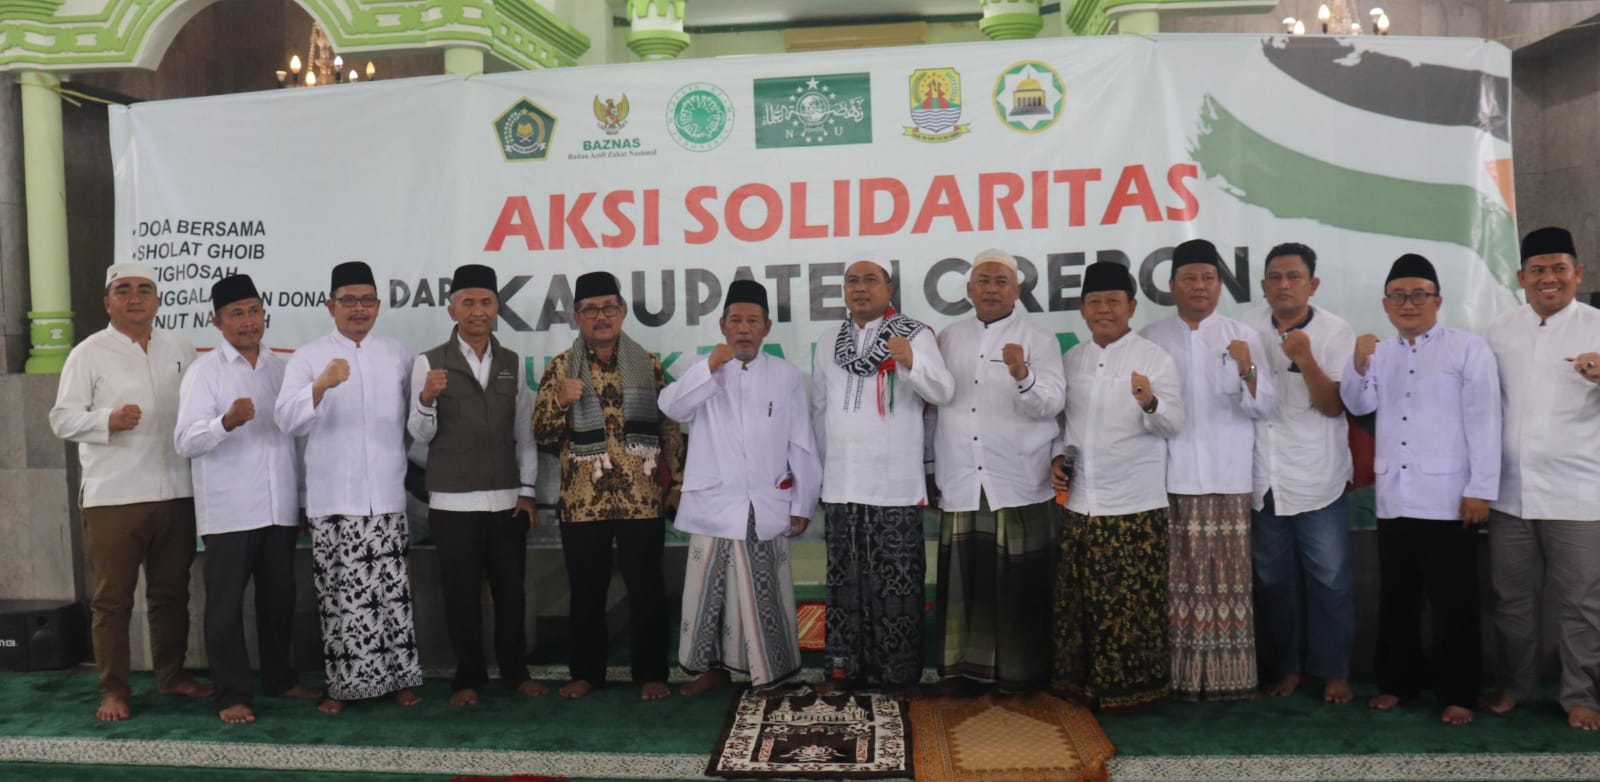 Kabupaten Cirebon Gelar Aksi Solidaritas Palestina, Bupati Imron: Mari Peduli Sesama